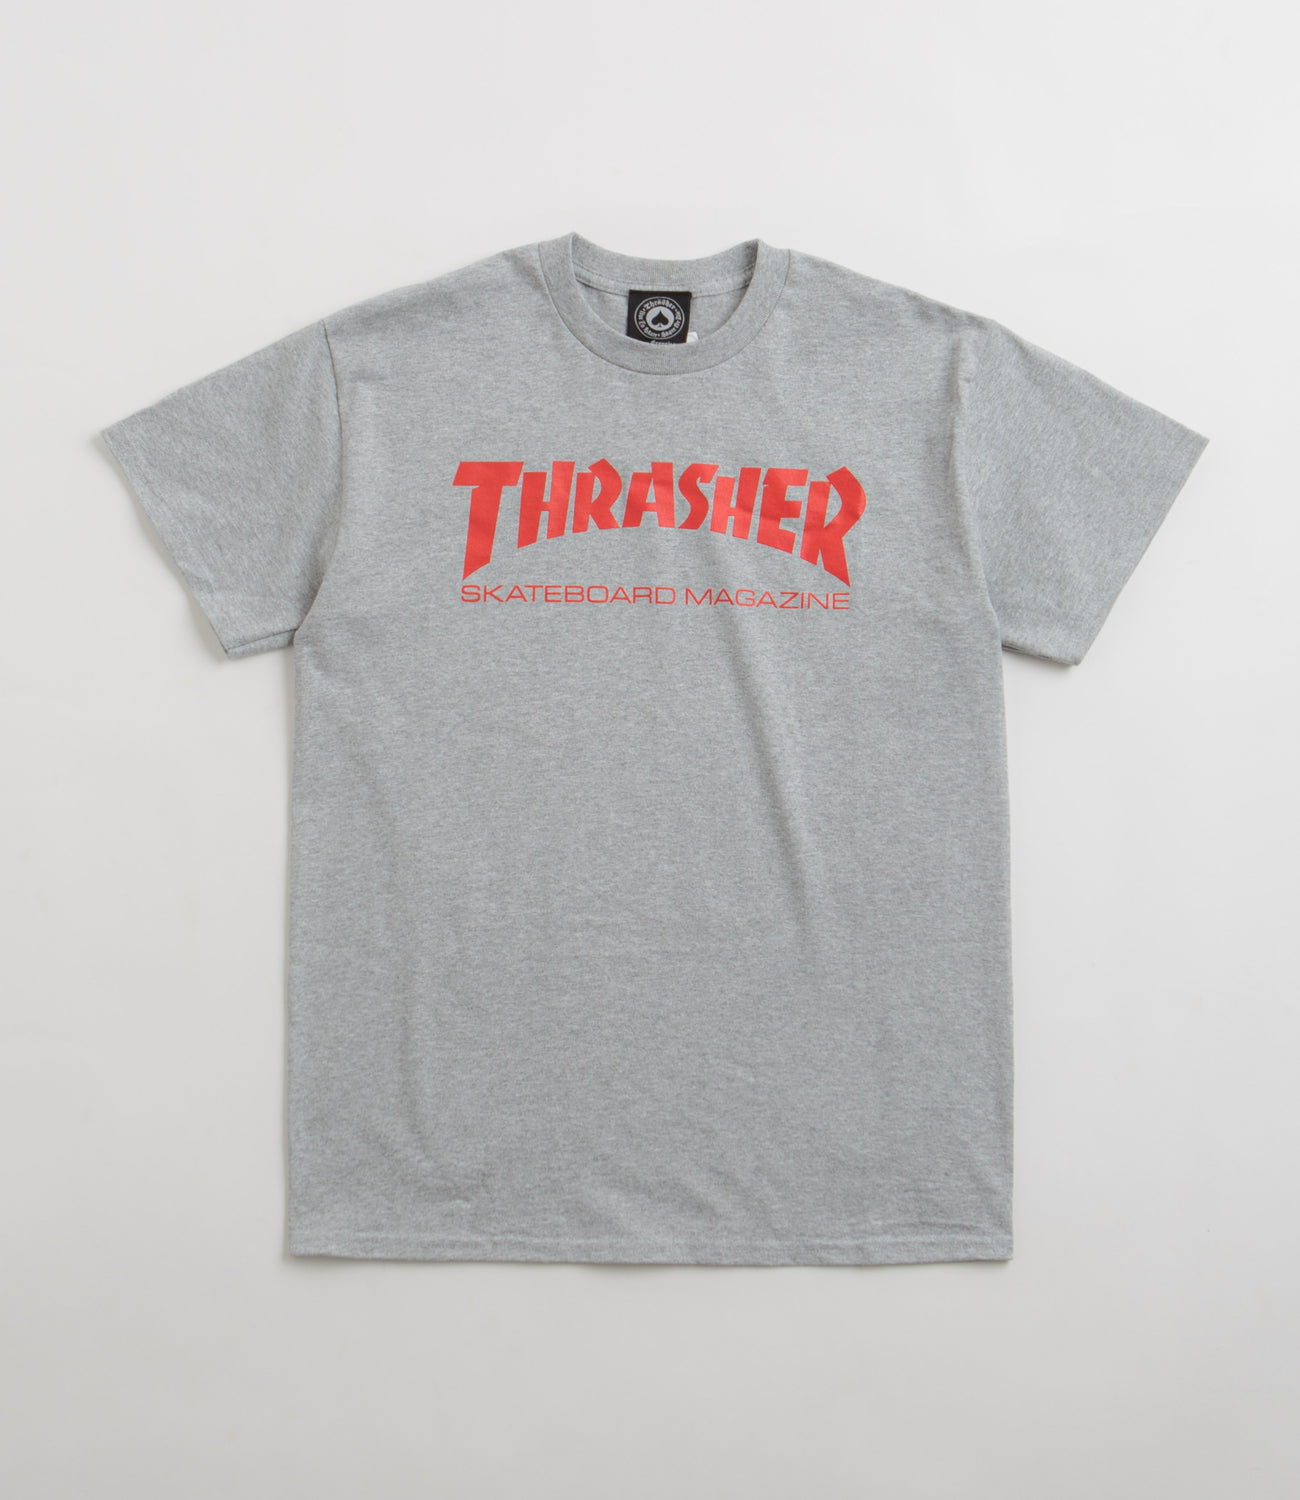 Thrasher Skate Mag T-Shirt - Grey / Red | Flatspot